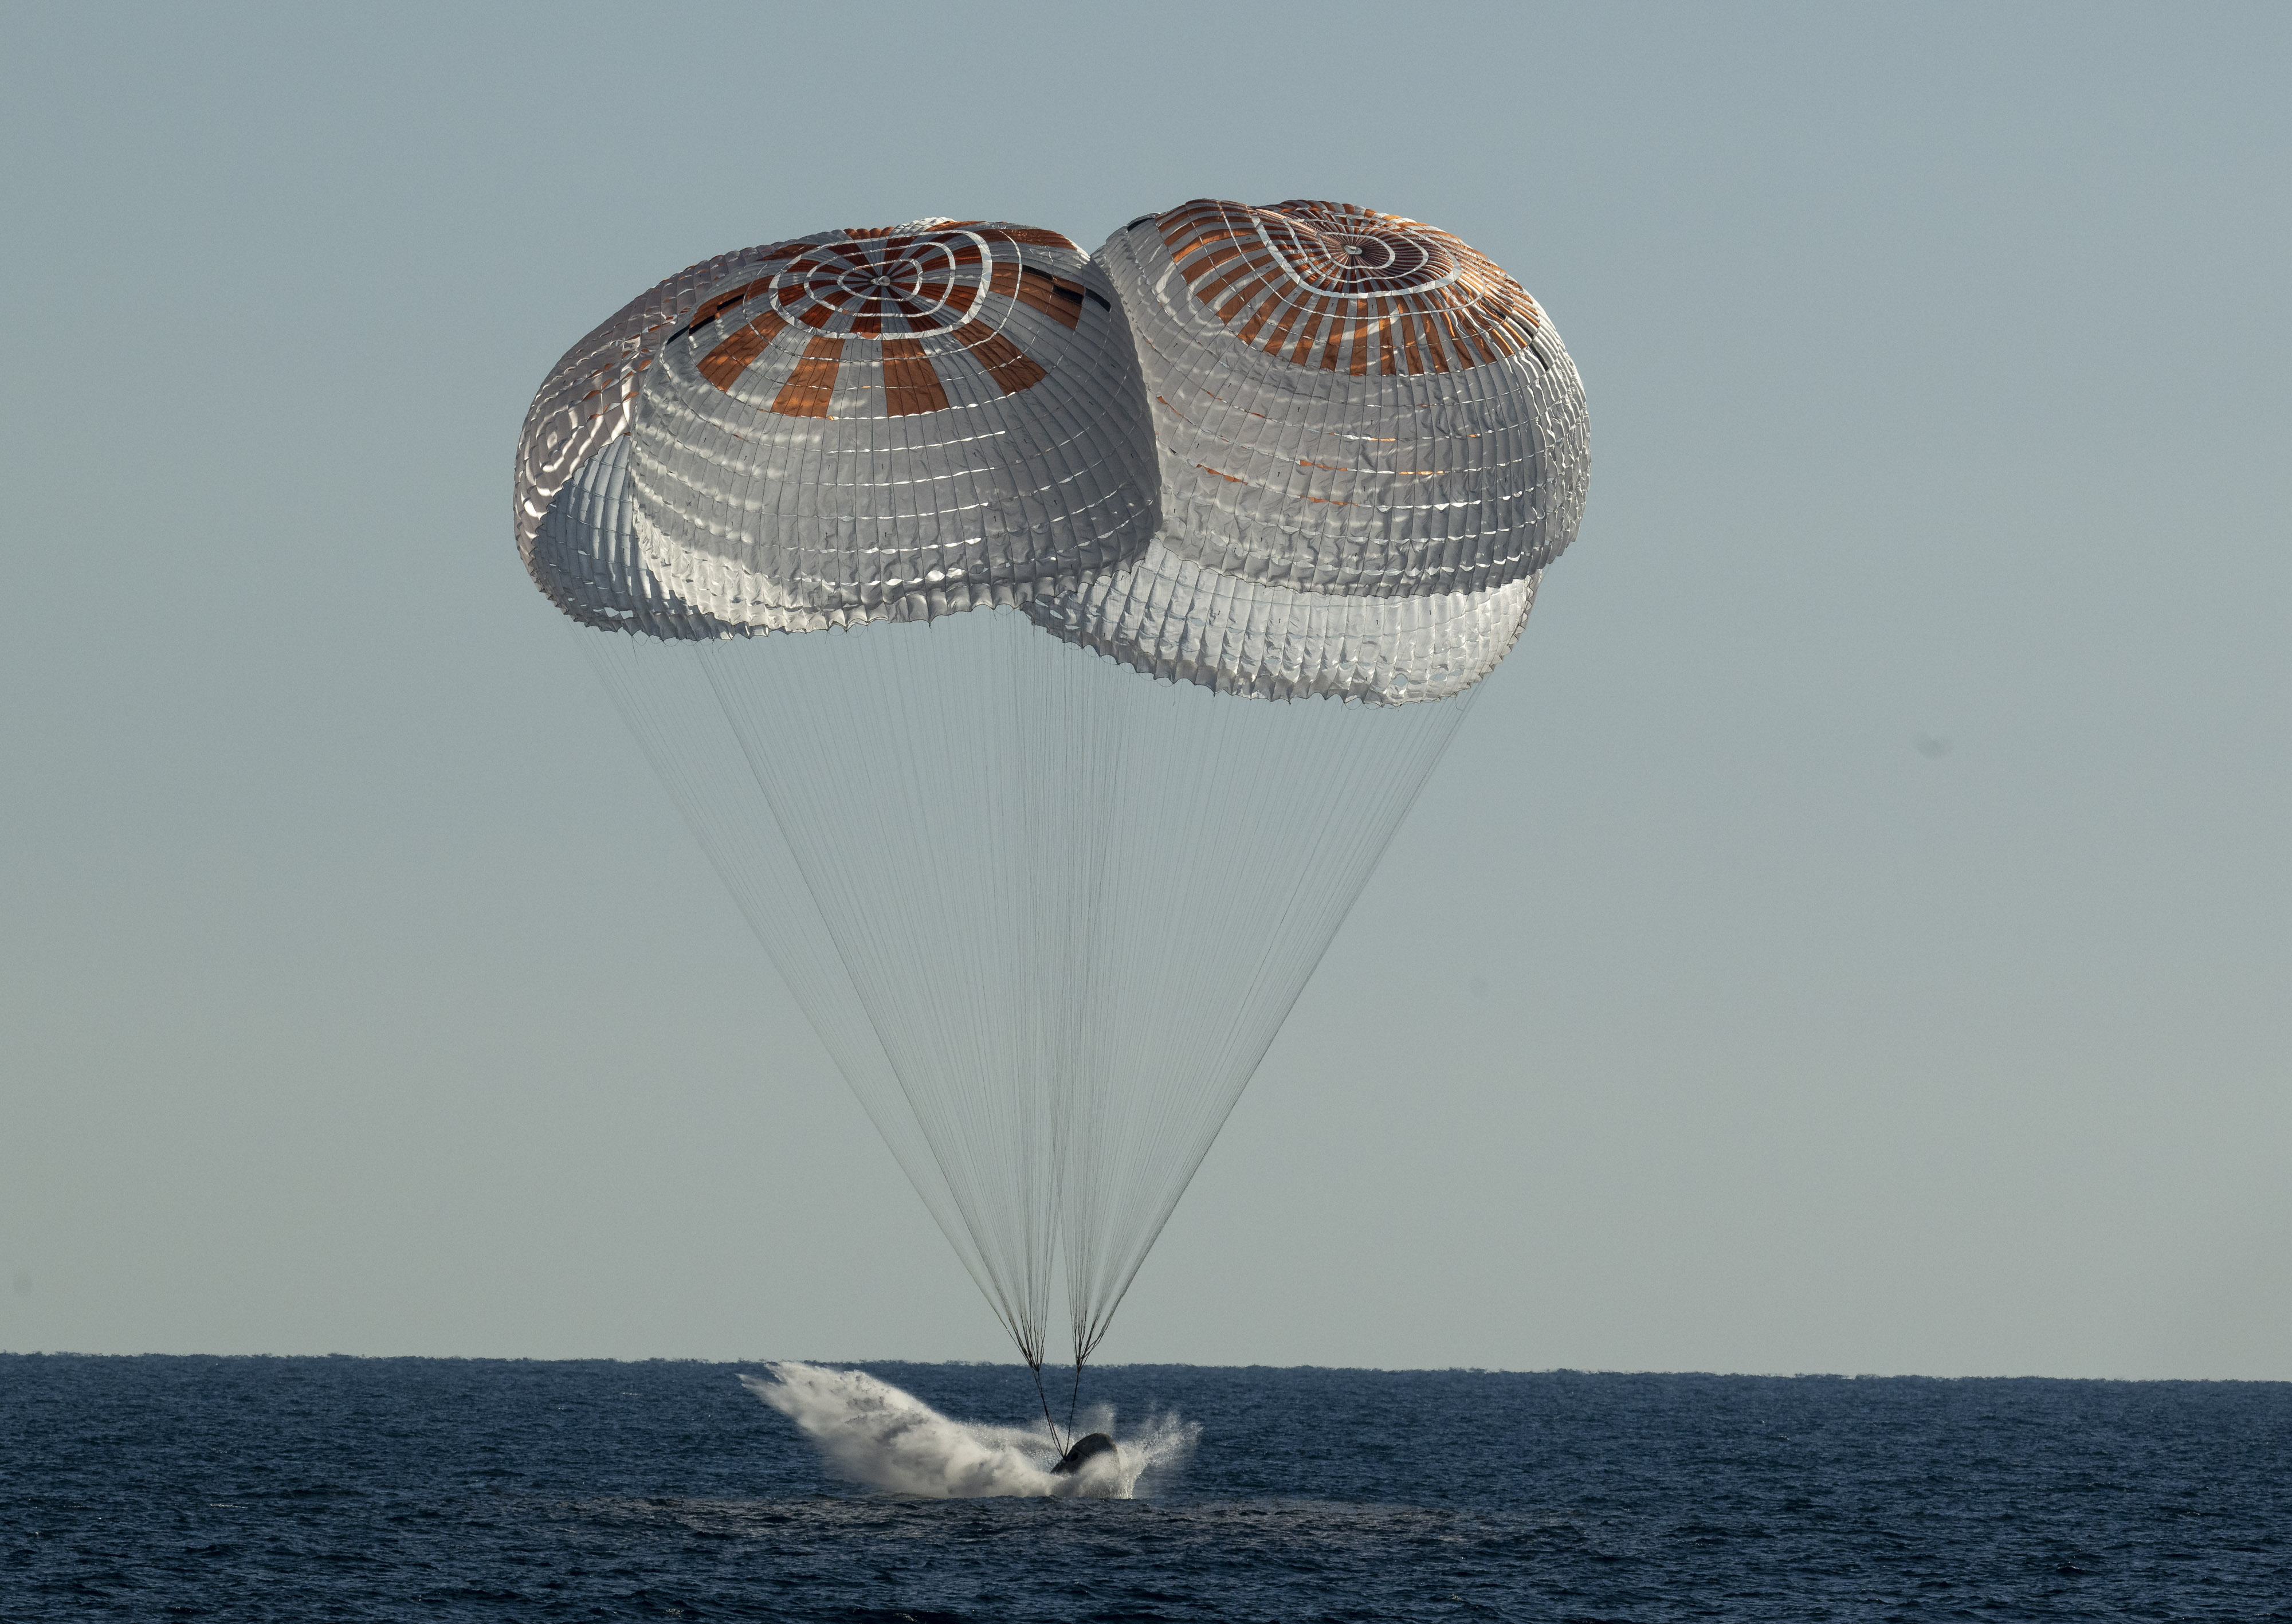 NASA's Crew-4 mission splashes down safely off Florida coast